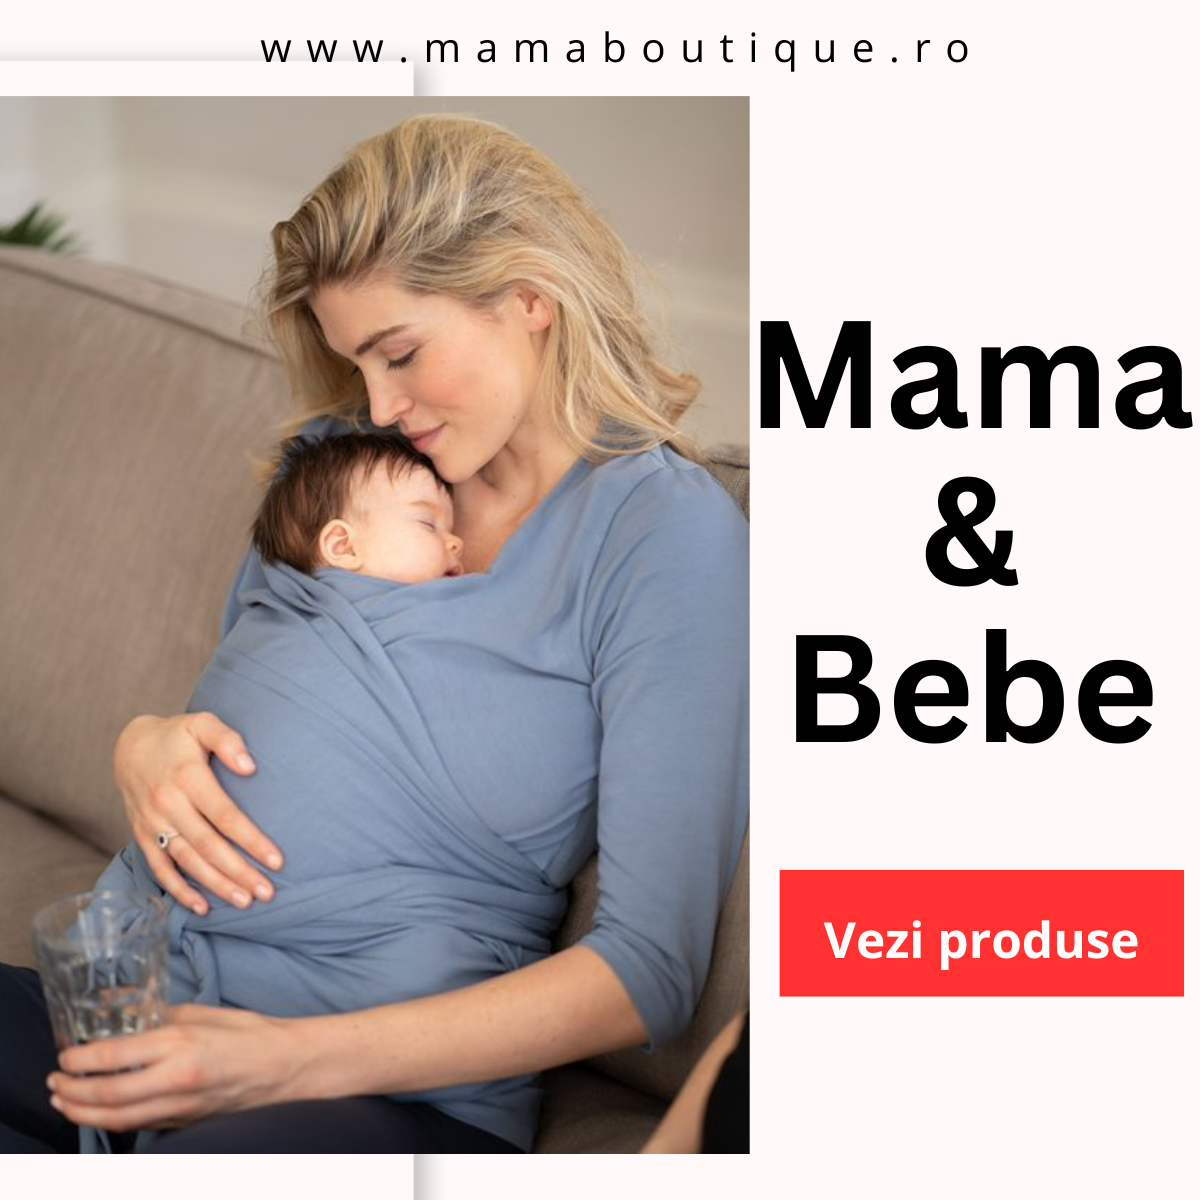 mamaboutique - Mama si Bebe